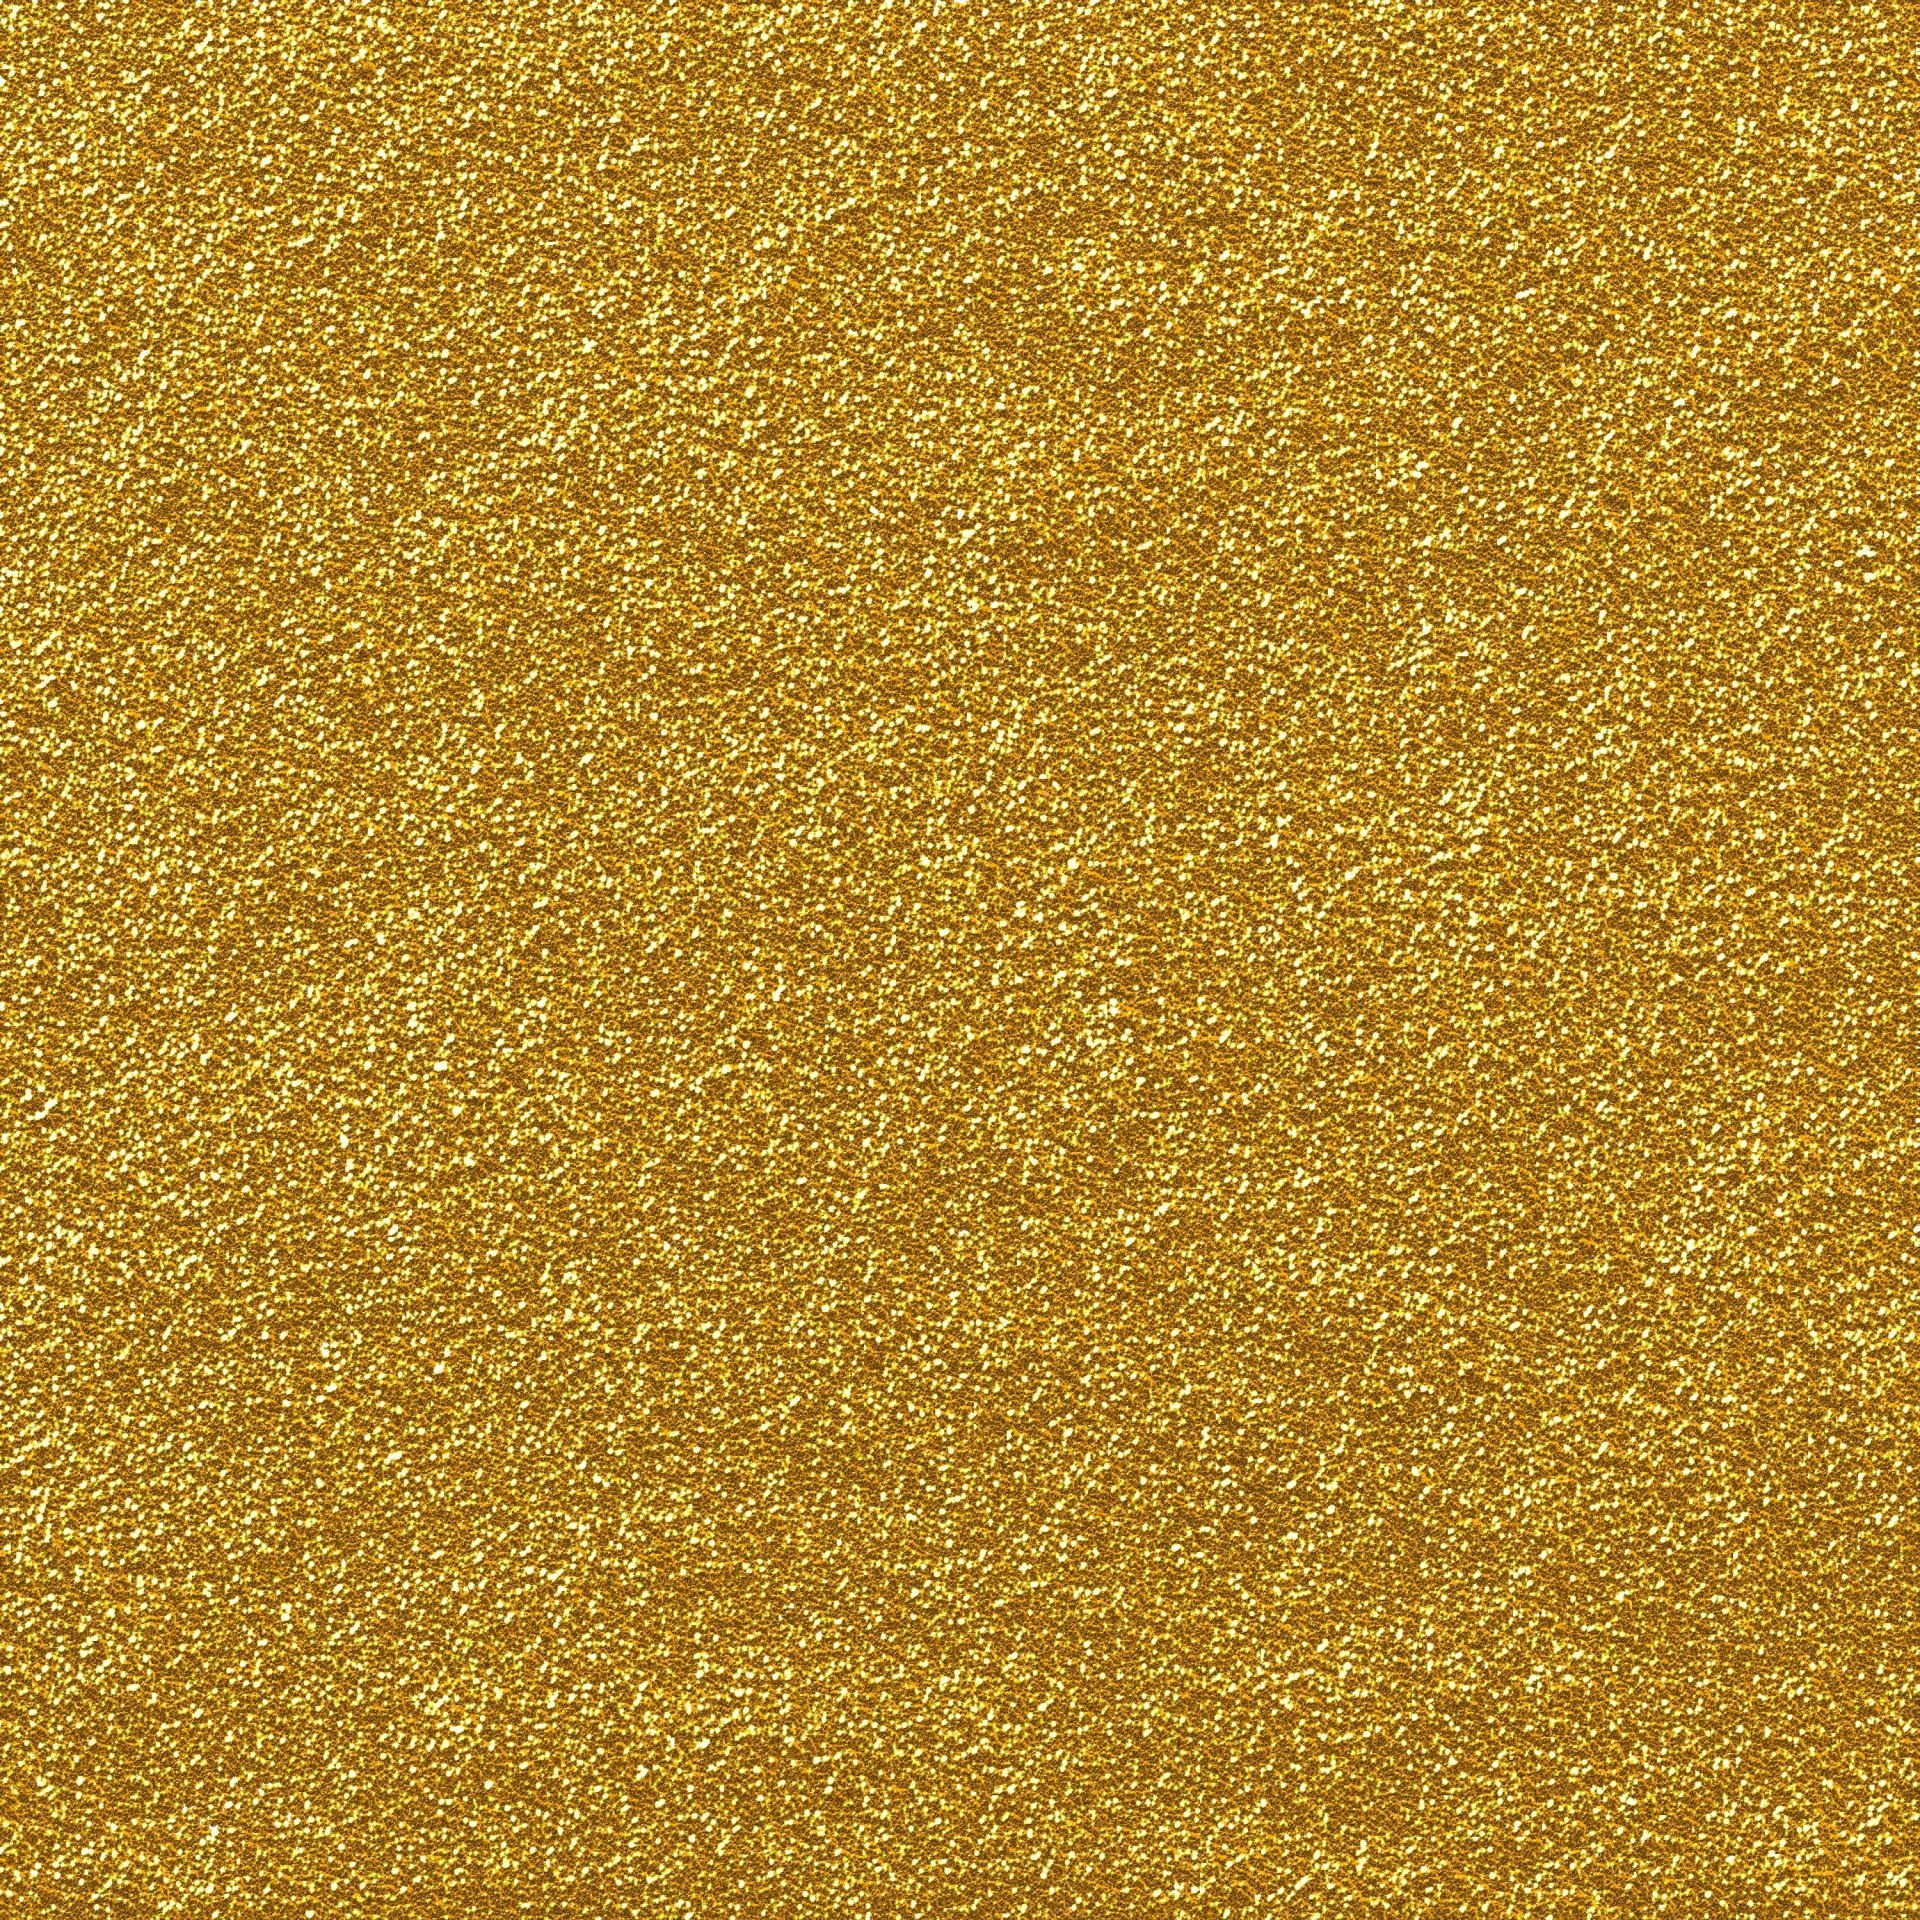 Metallic Gold Glitter Texture Free Stock Photo HD   Public Domain